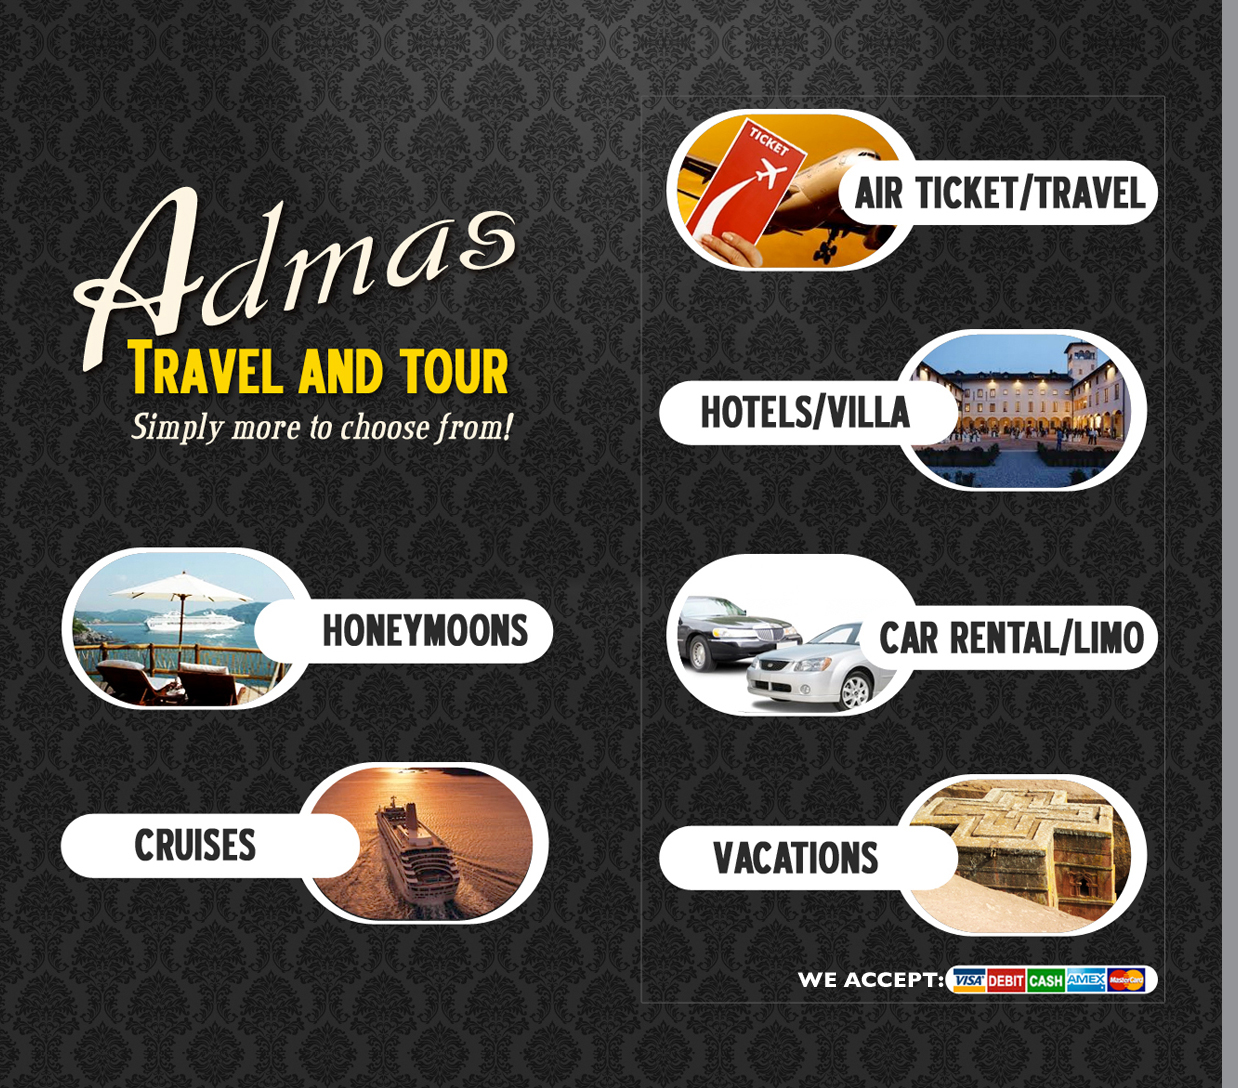 Admas_Travel_BK